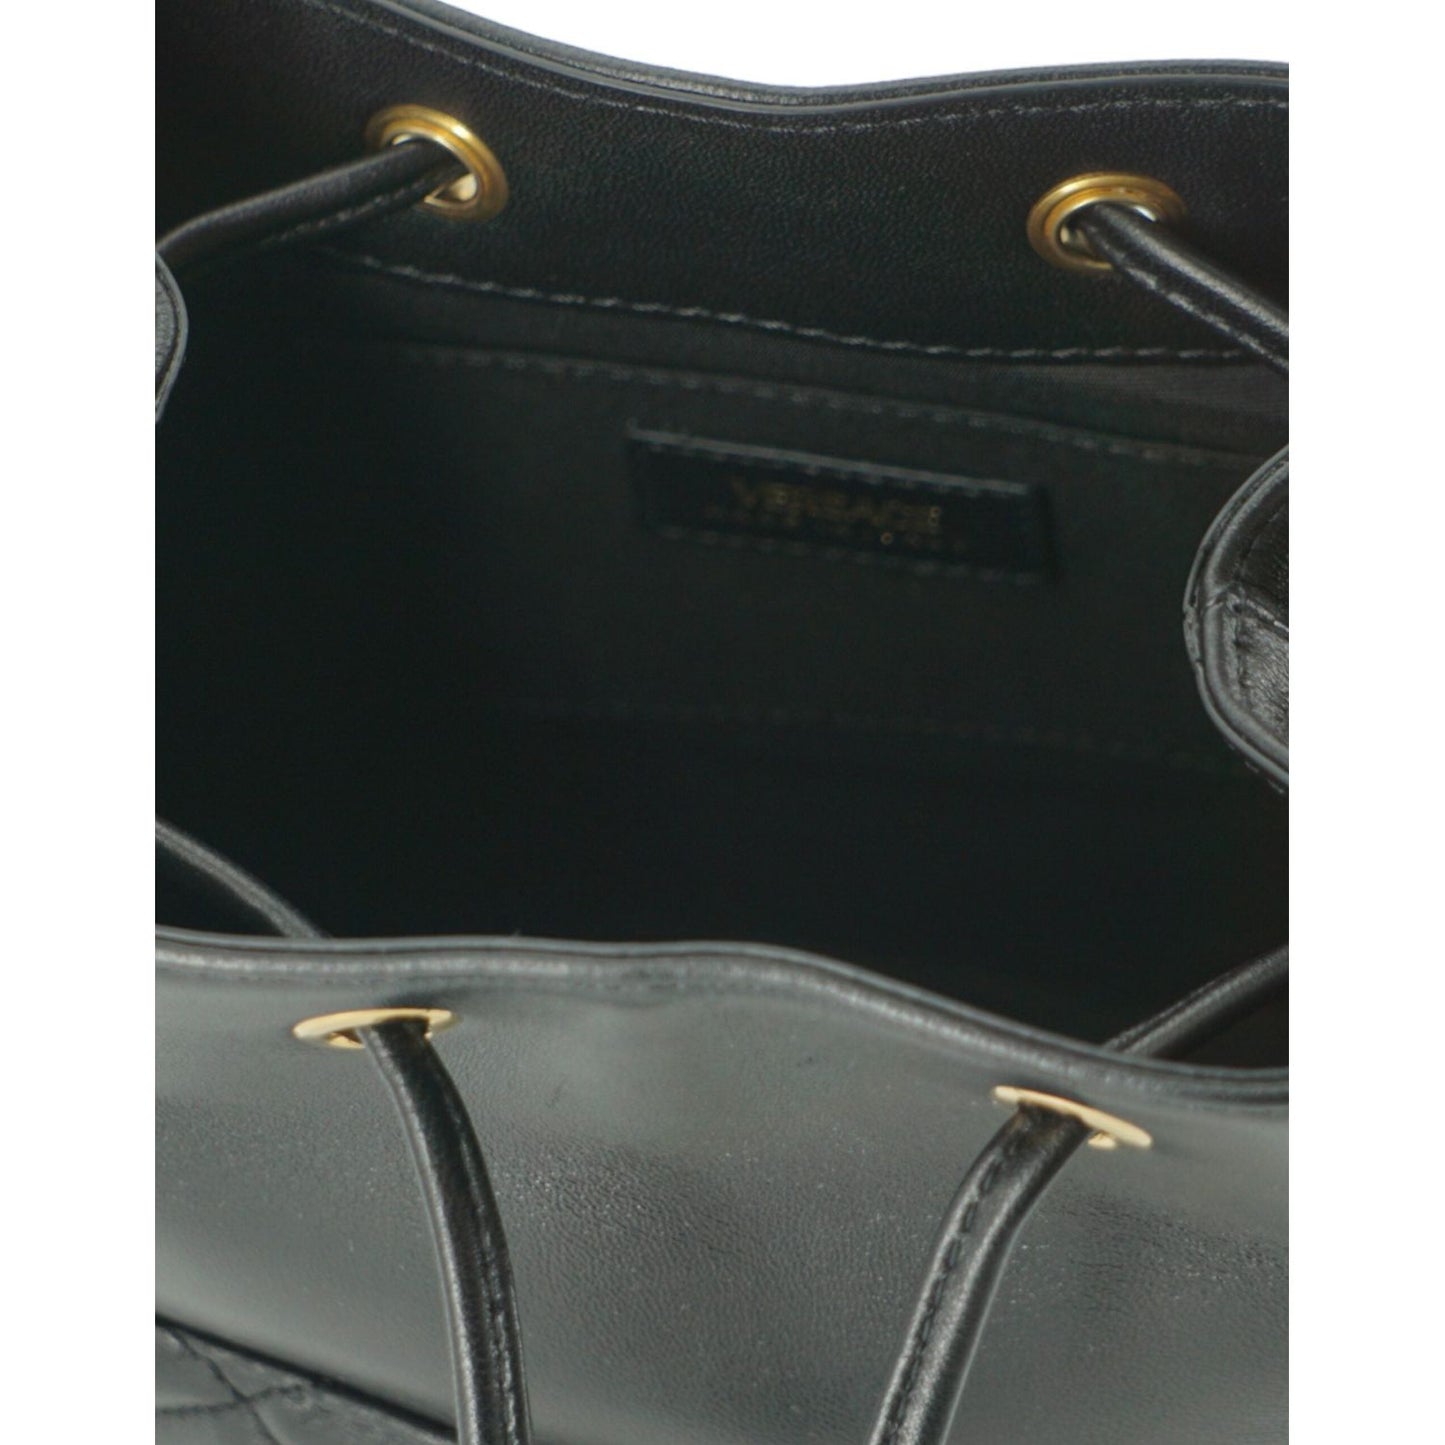 Versace Black Calf Leather Small Bucket Shoulder Bag black-calf-leather-small-bucket-shoulder-bag DSC01118-scaled-a4ad003e-23b.jpg